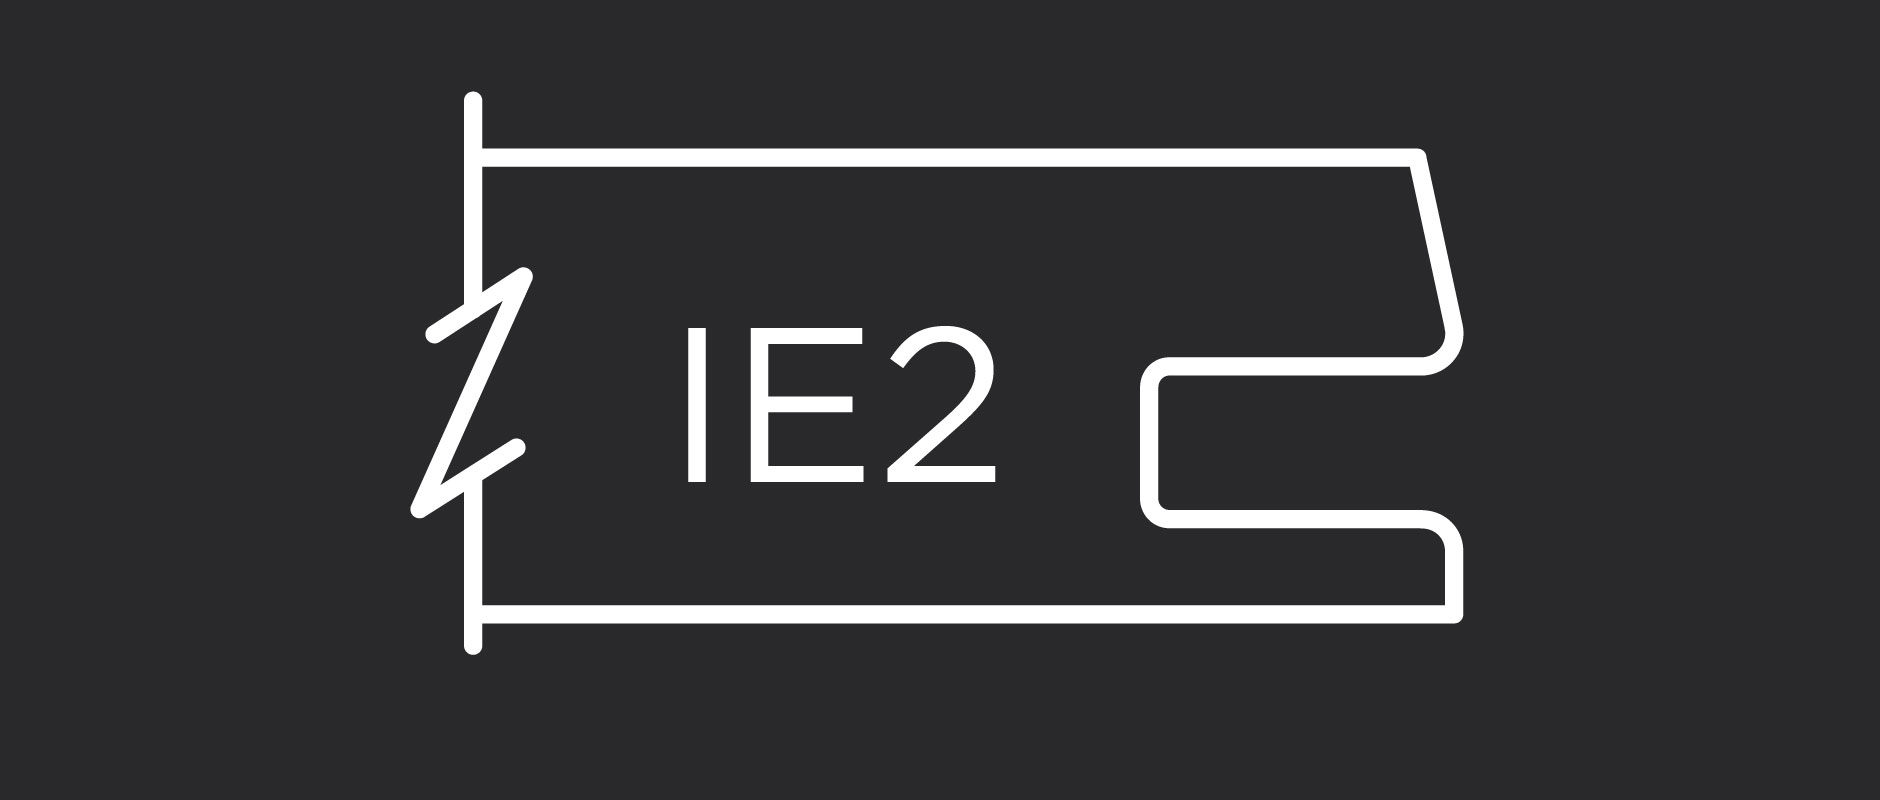 IE2 Inside Edge Profile